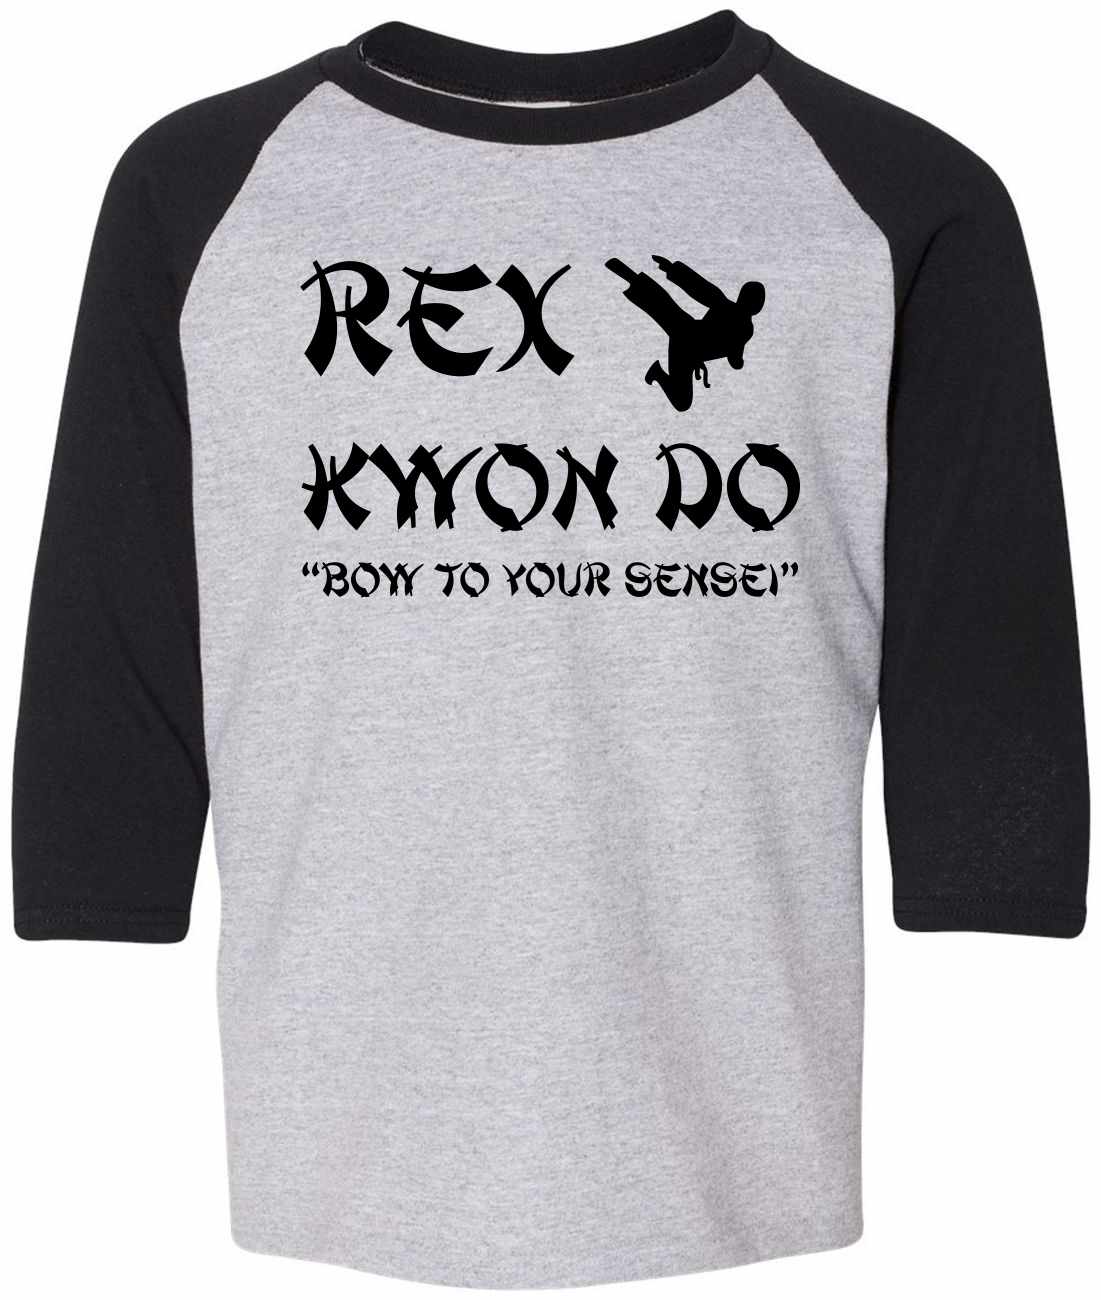 Rex Kwon Do Youth Baseball (#648-212)